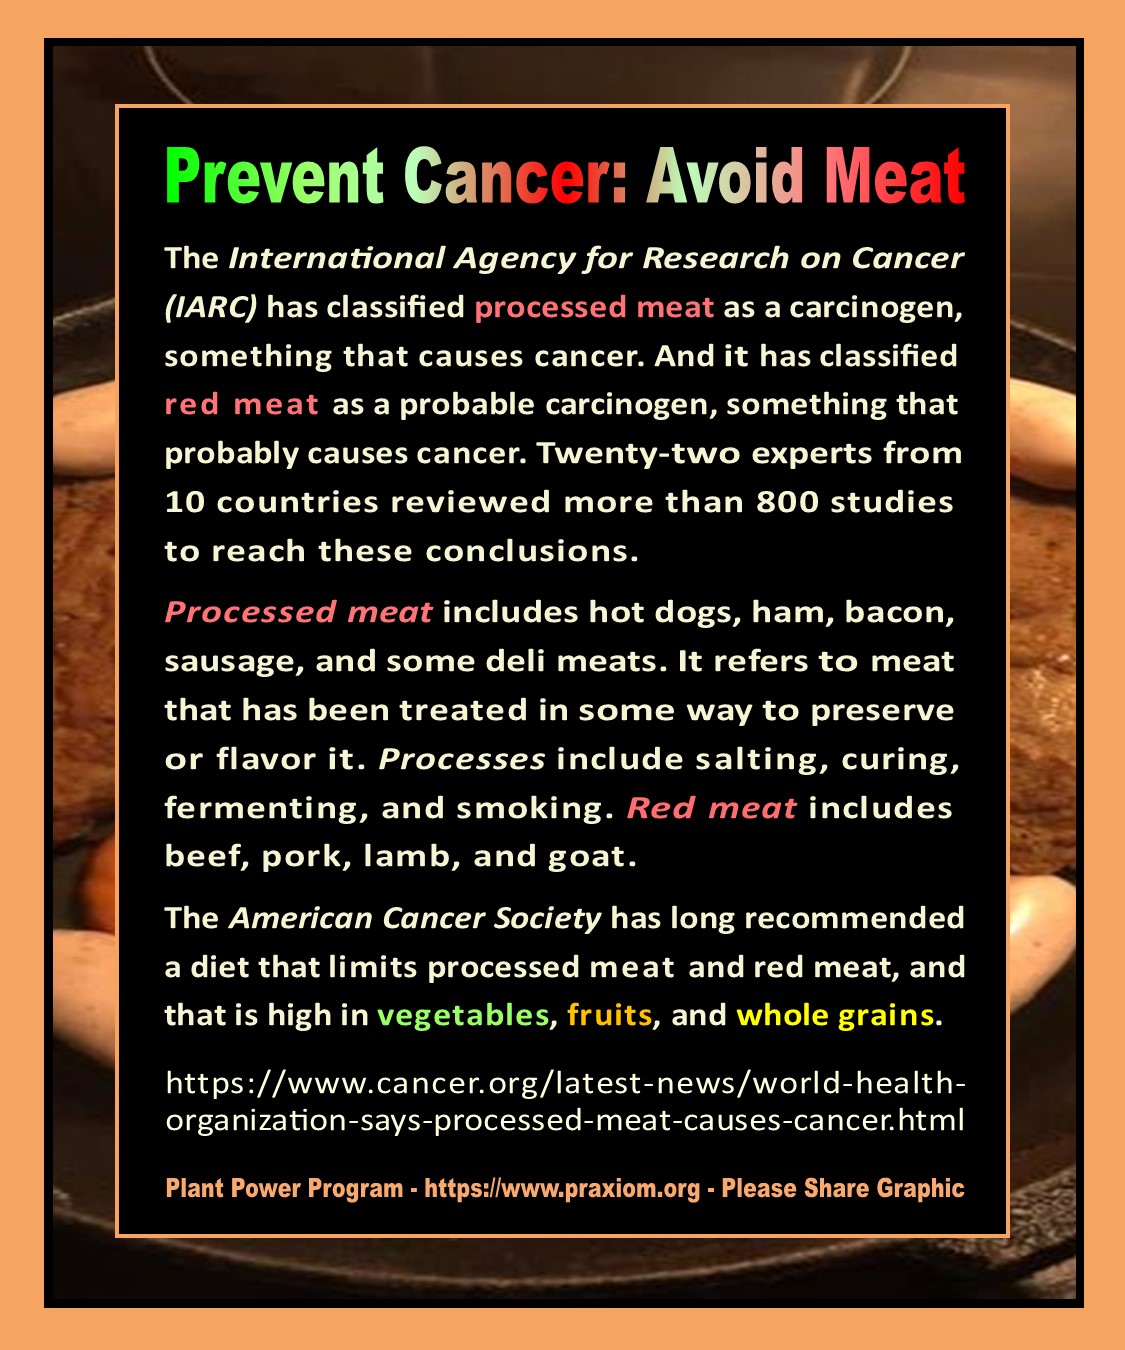 Prevent Cancer, Avoid Meat